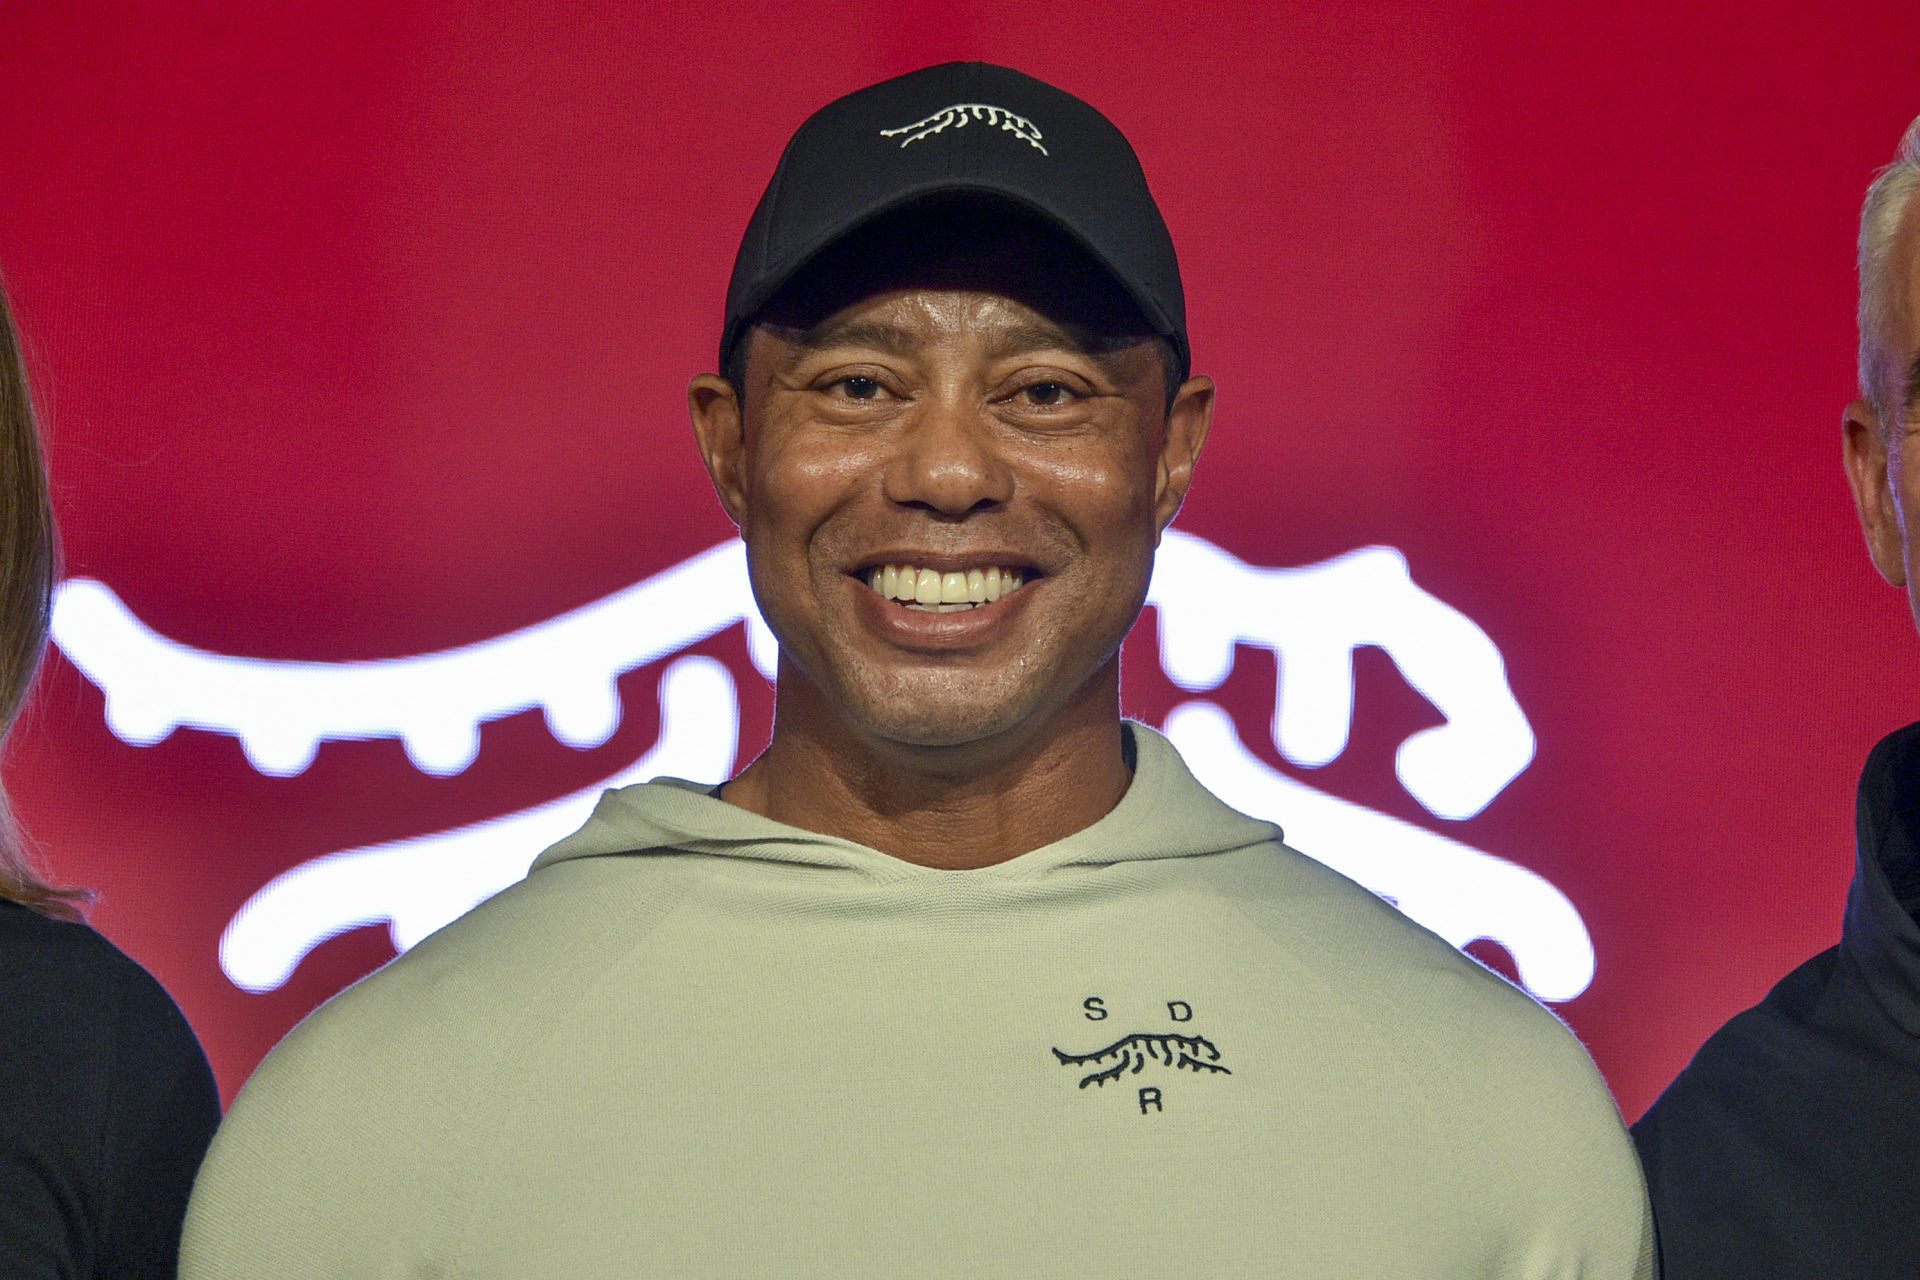 Tiger Woods creates 'Sunday Red' brand after Nike split